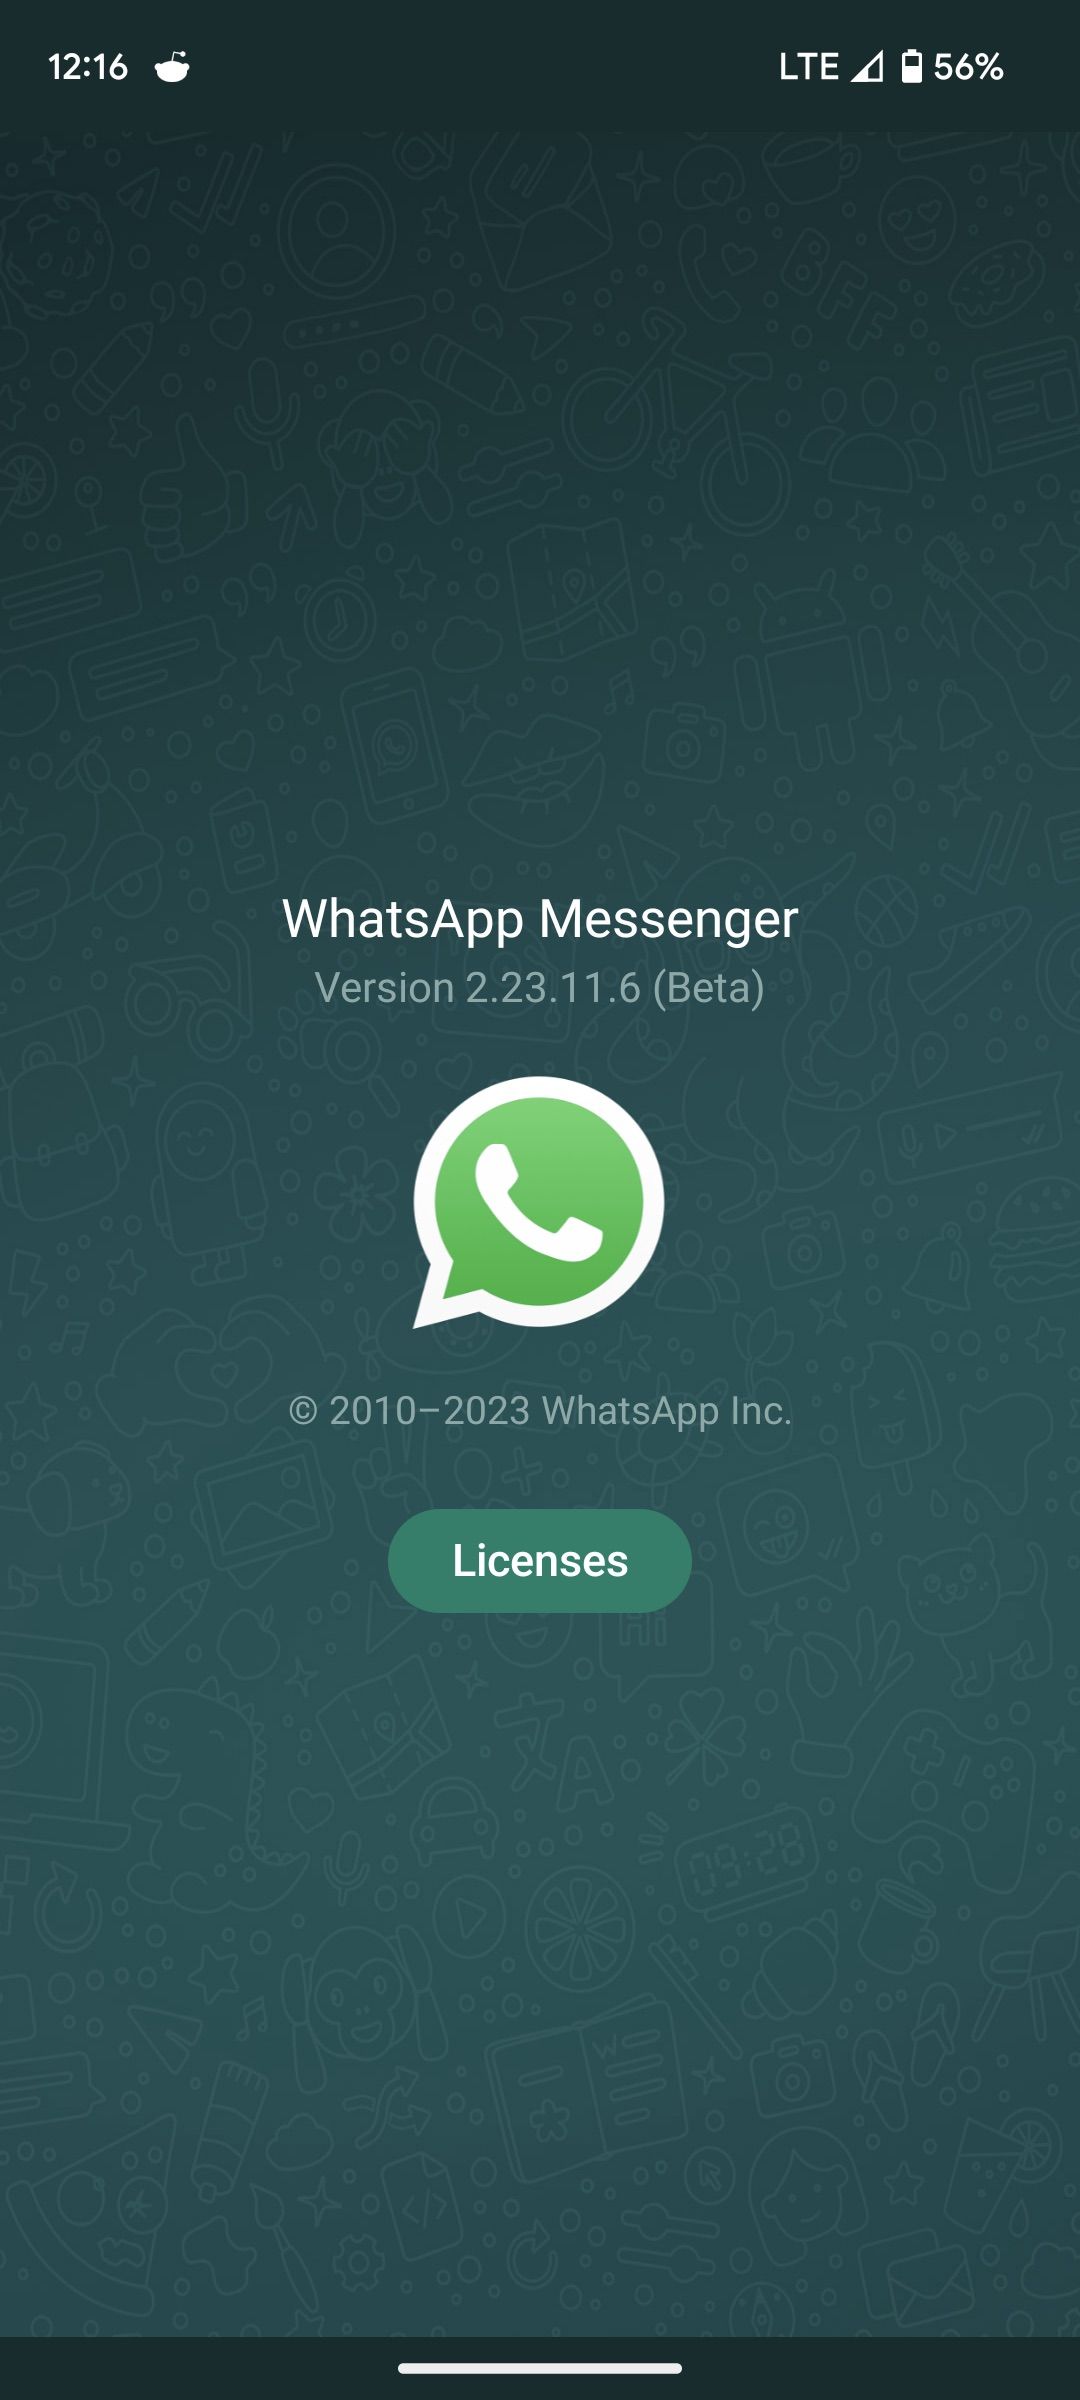 versão beta do whatsapp